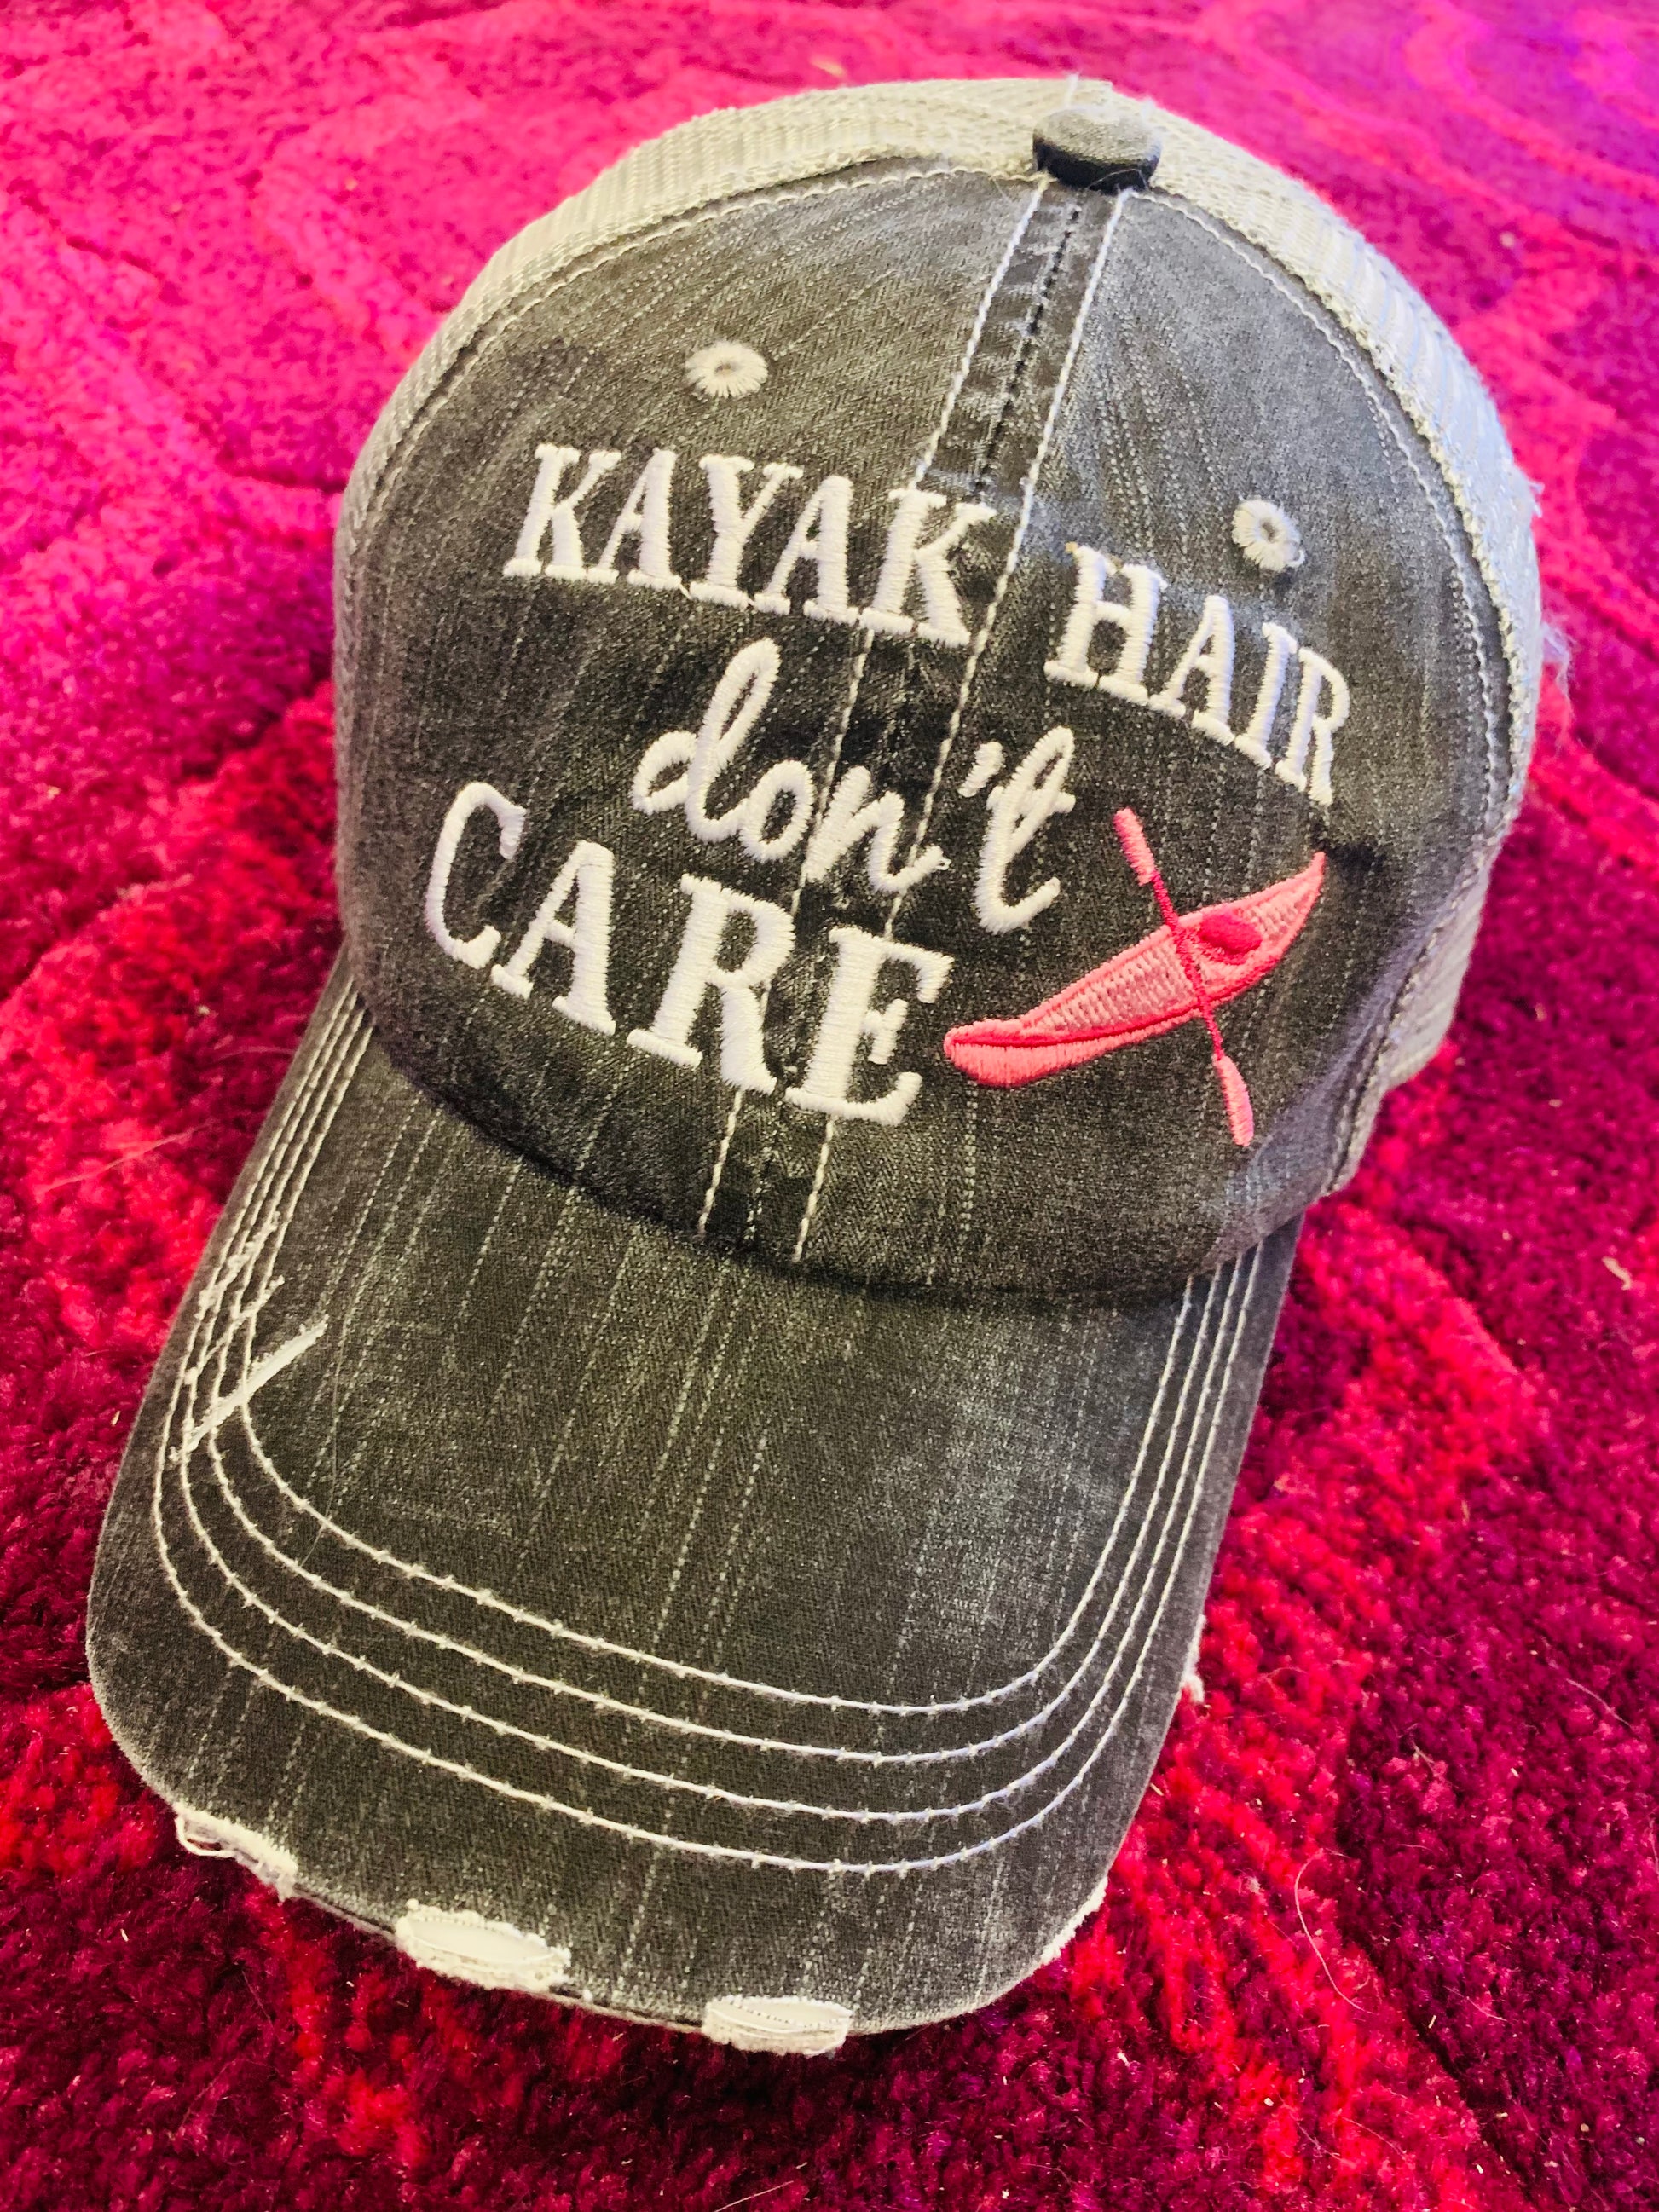 Kayak hats Kayak hair dont care Teal or pink kayak Unisex trucker cap